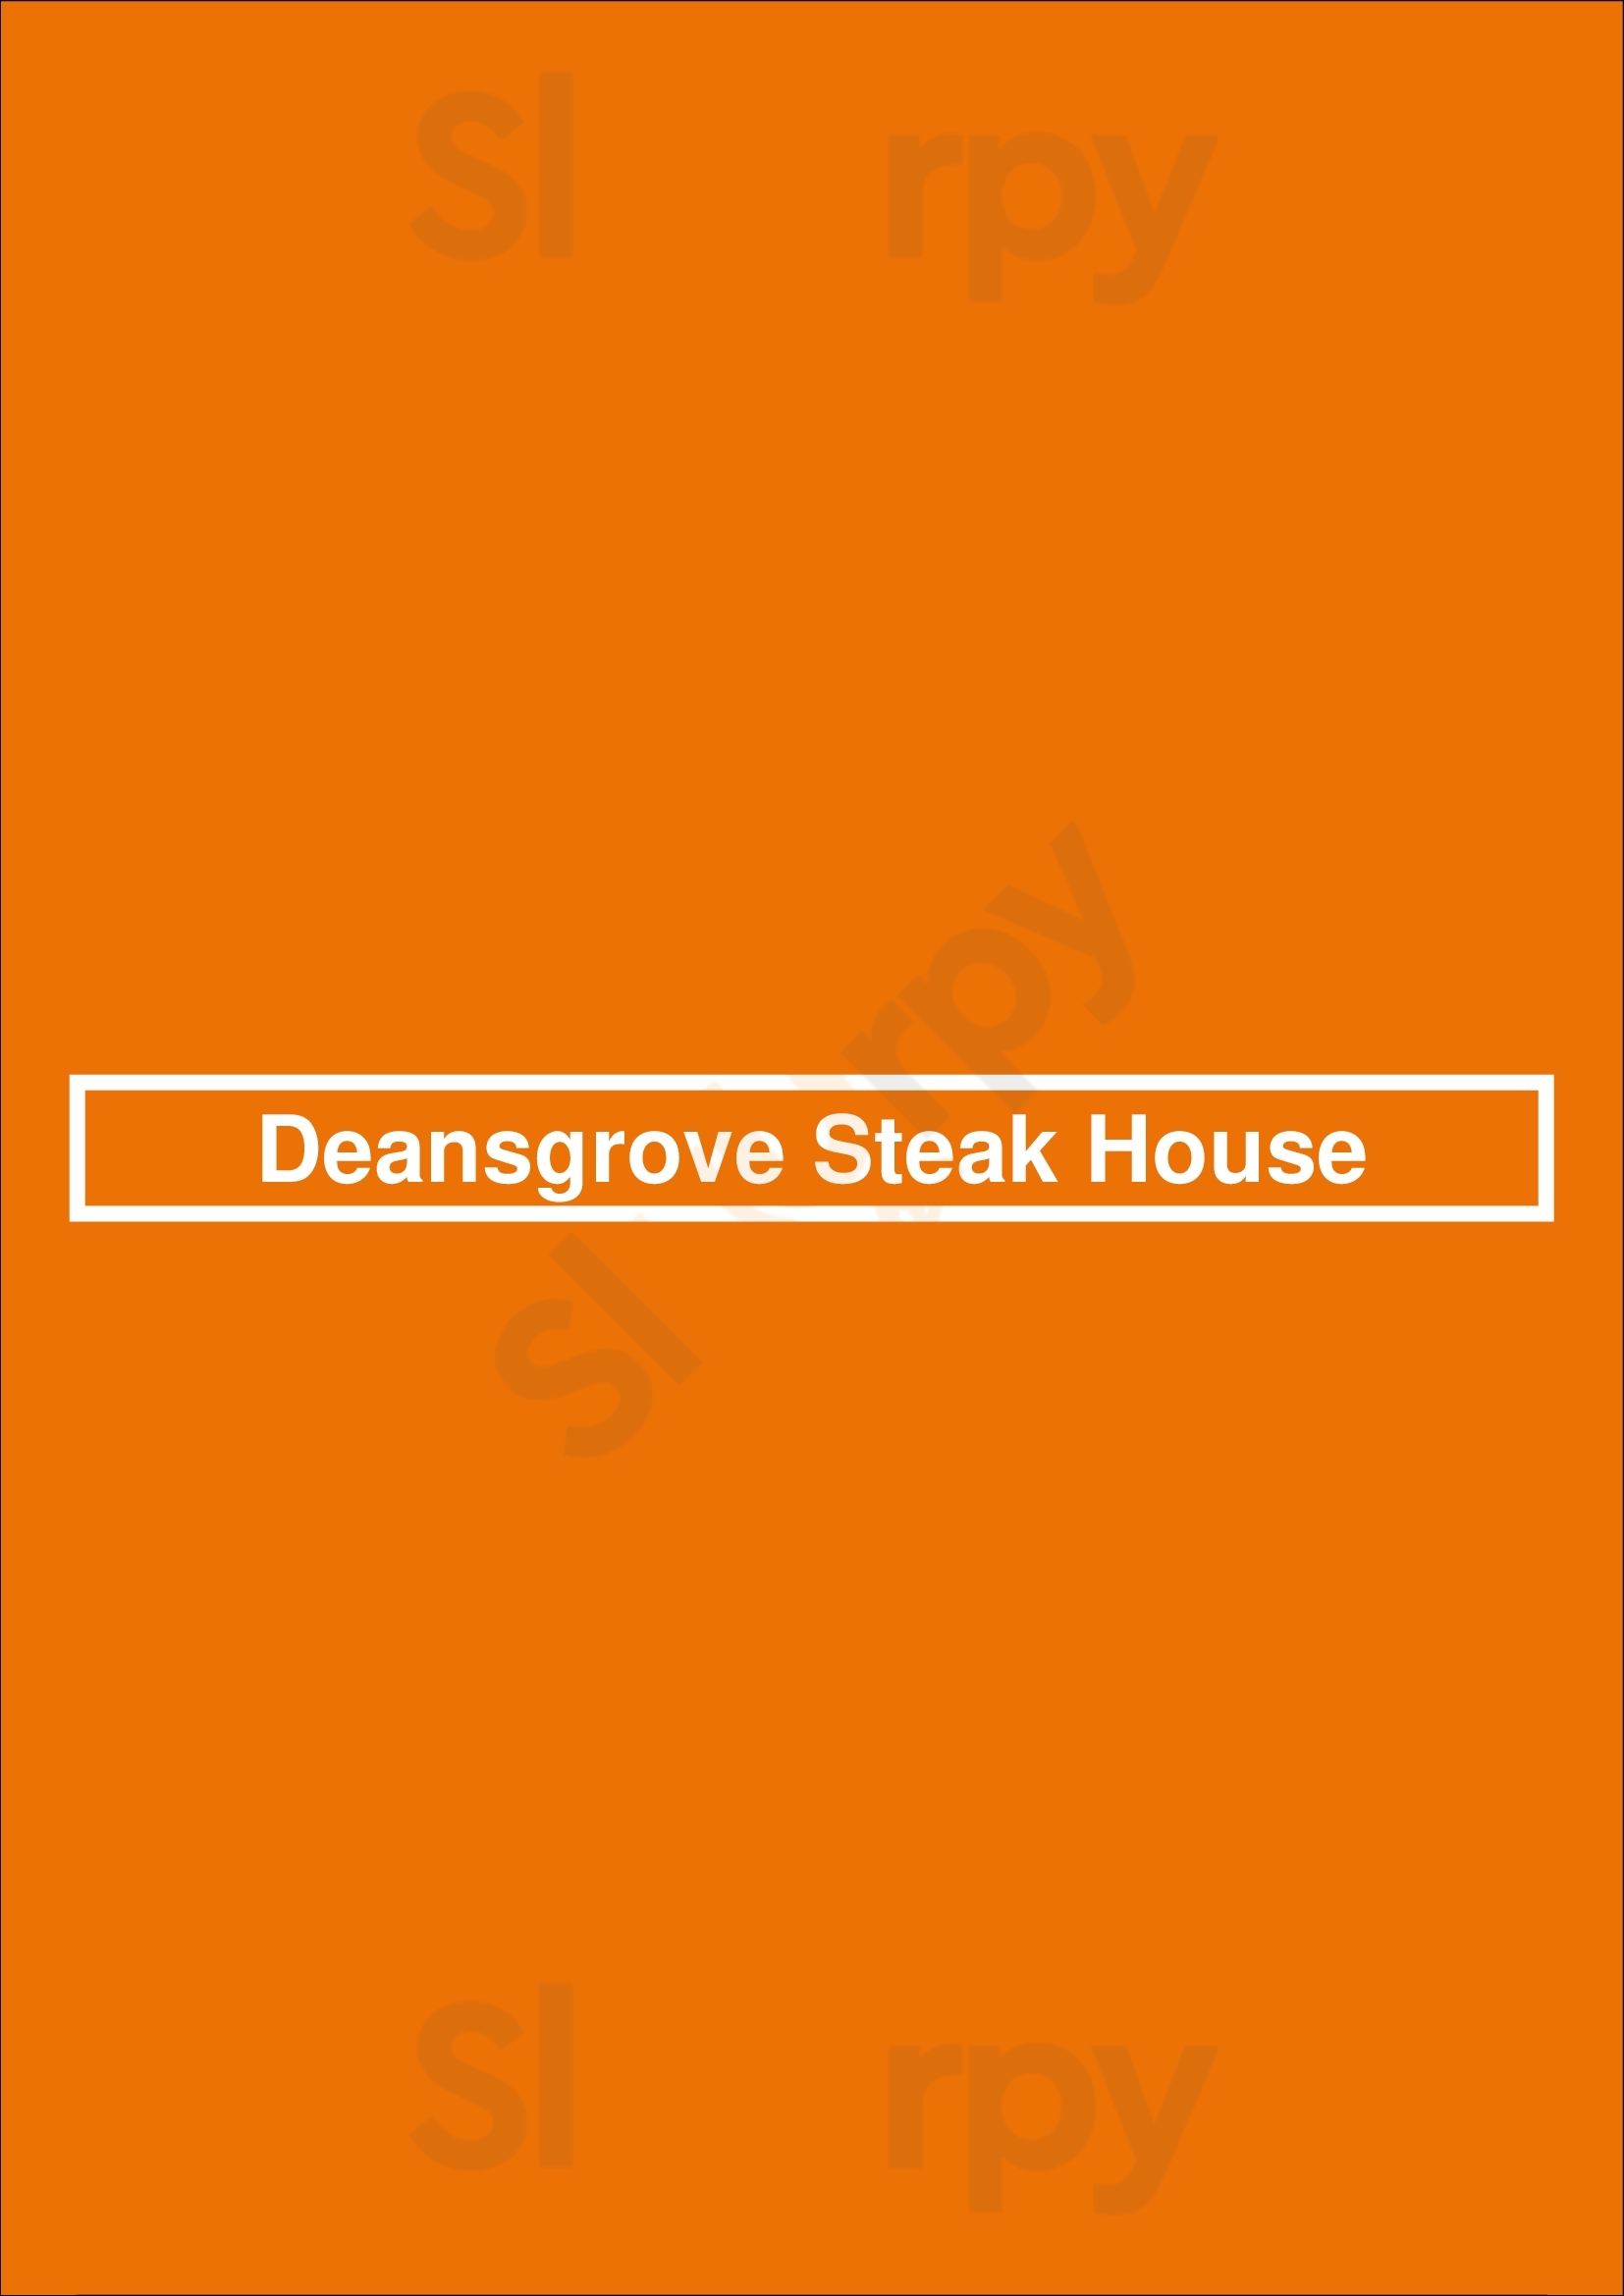 Deansgrove Steak House Tipperary Menu - 1